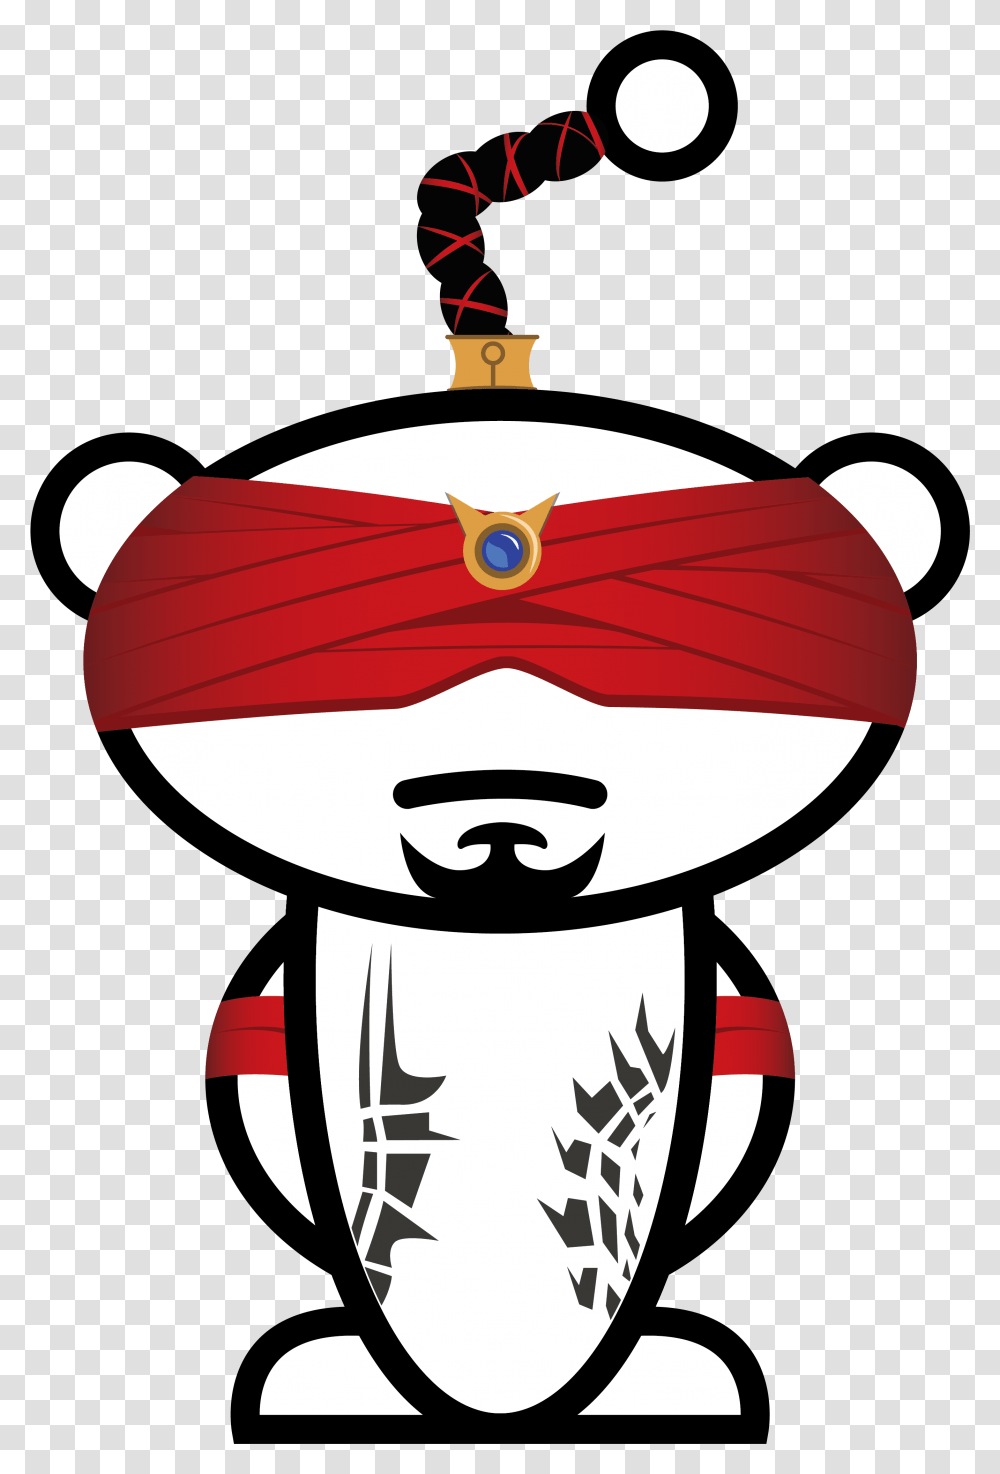 Reddit Alien Background Icon, Apparel, Headband, Hat Transparent Png